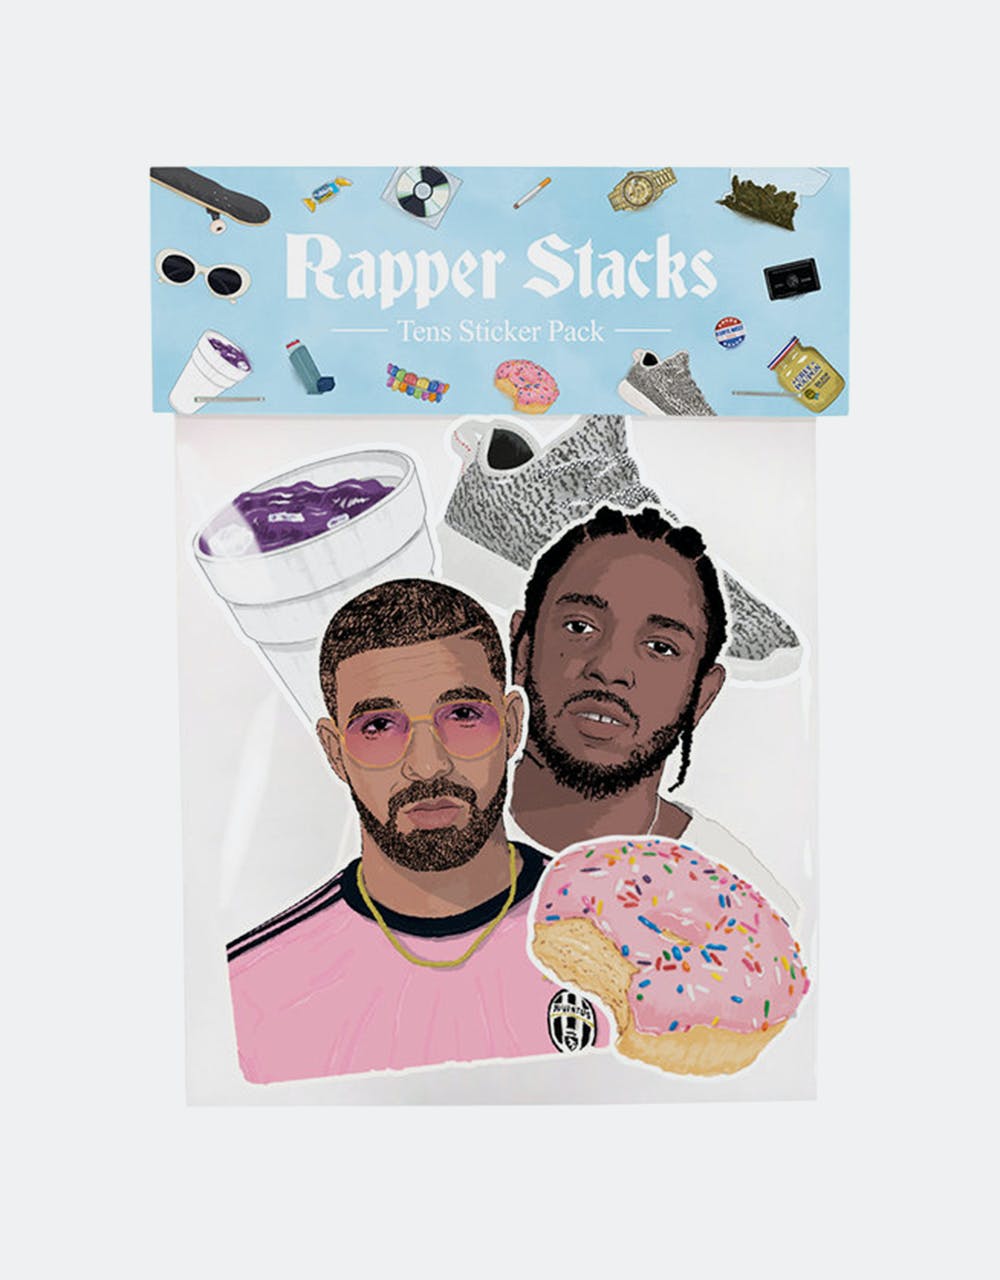 Rapper Stacks Tens Sticker Pack